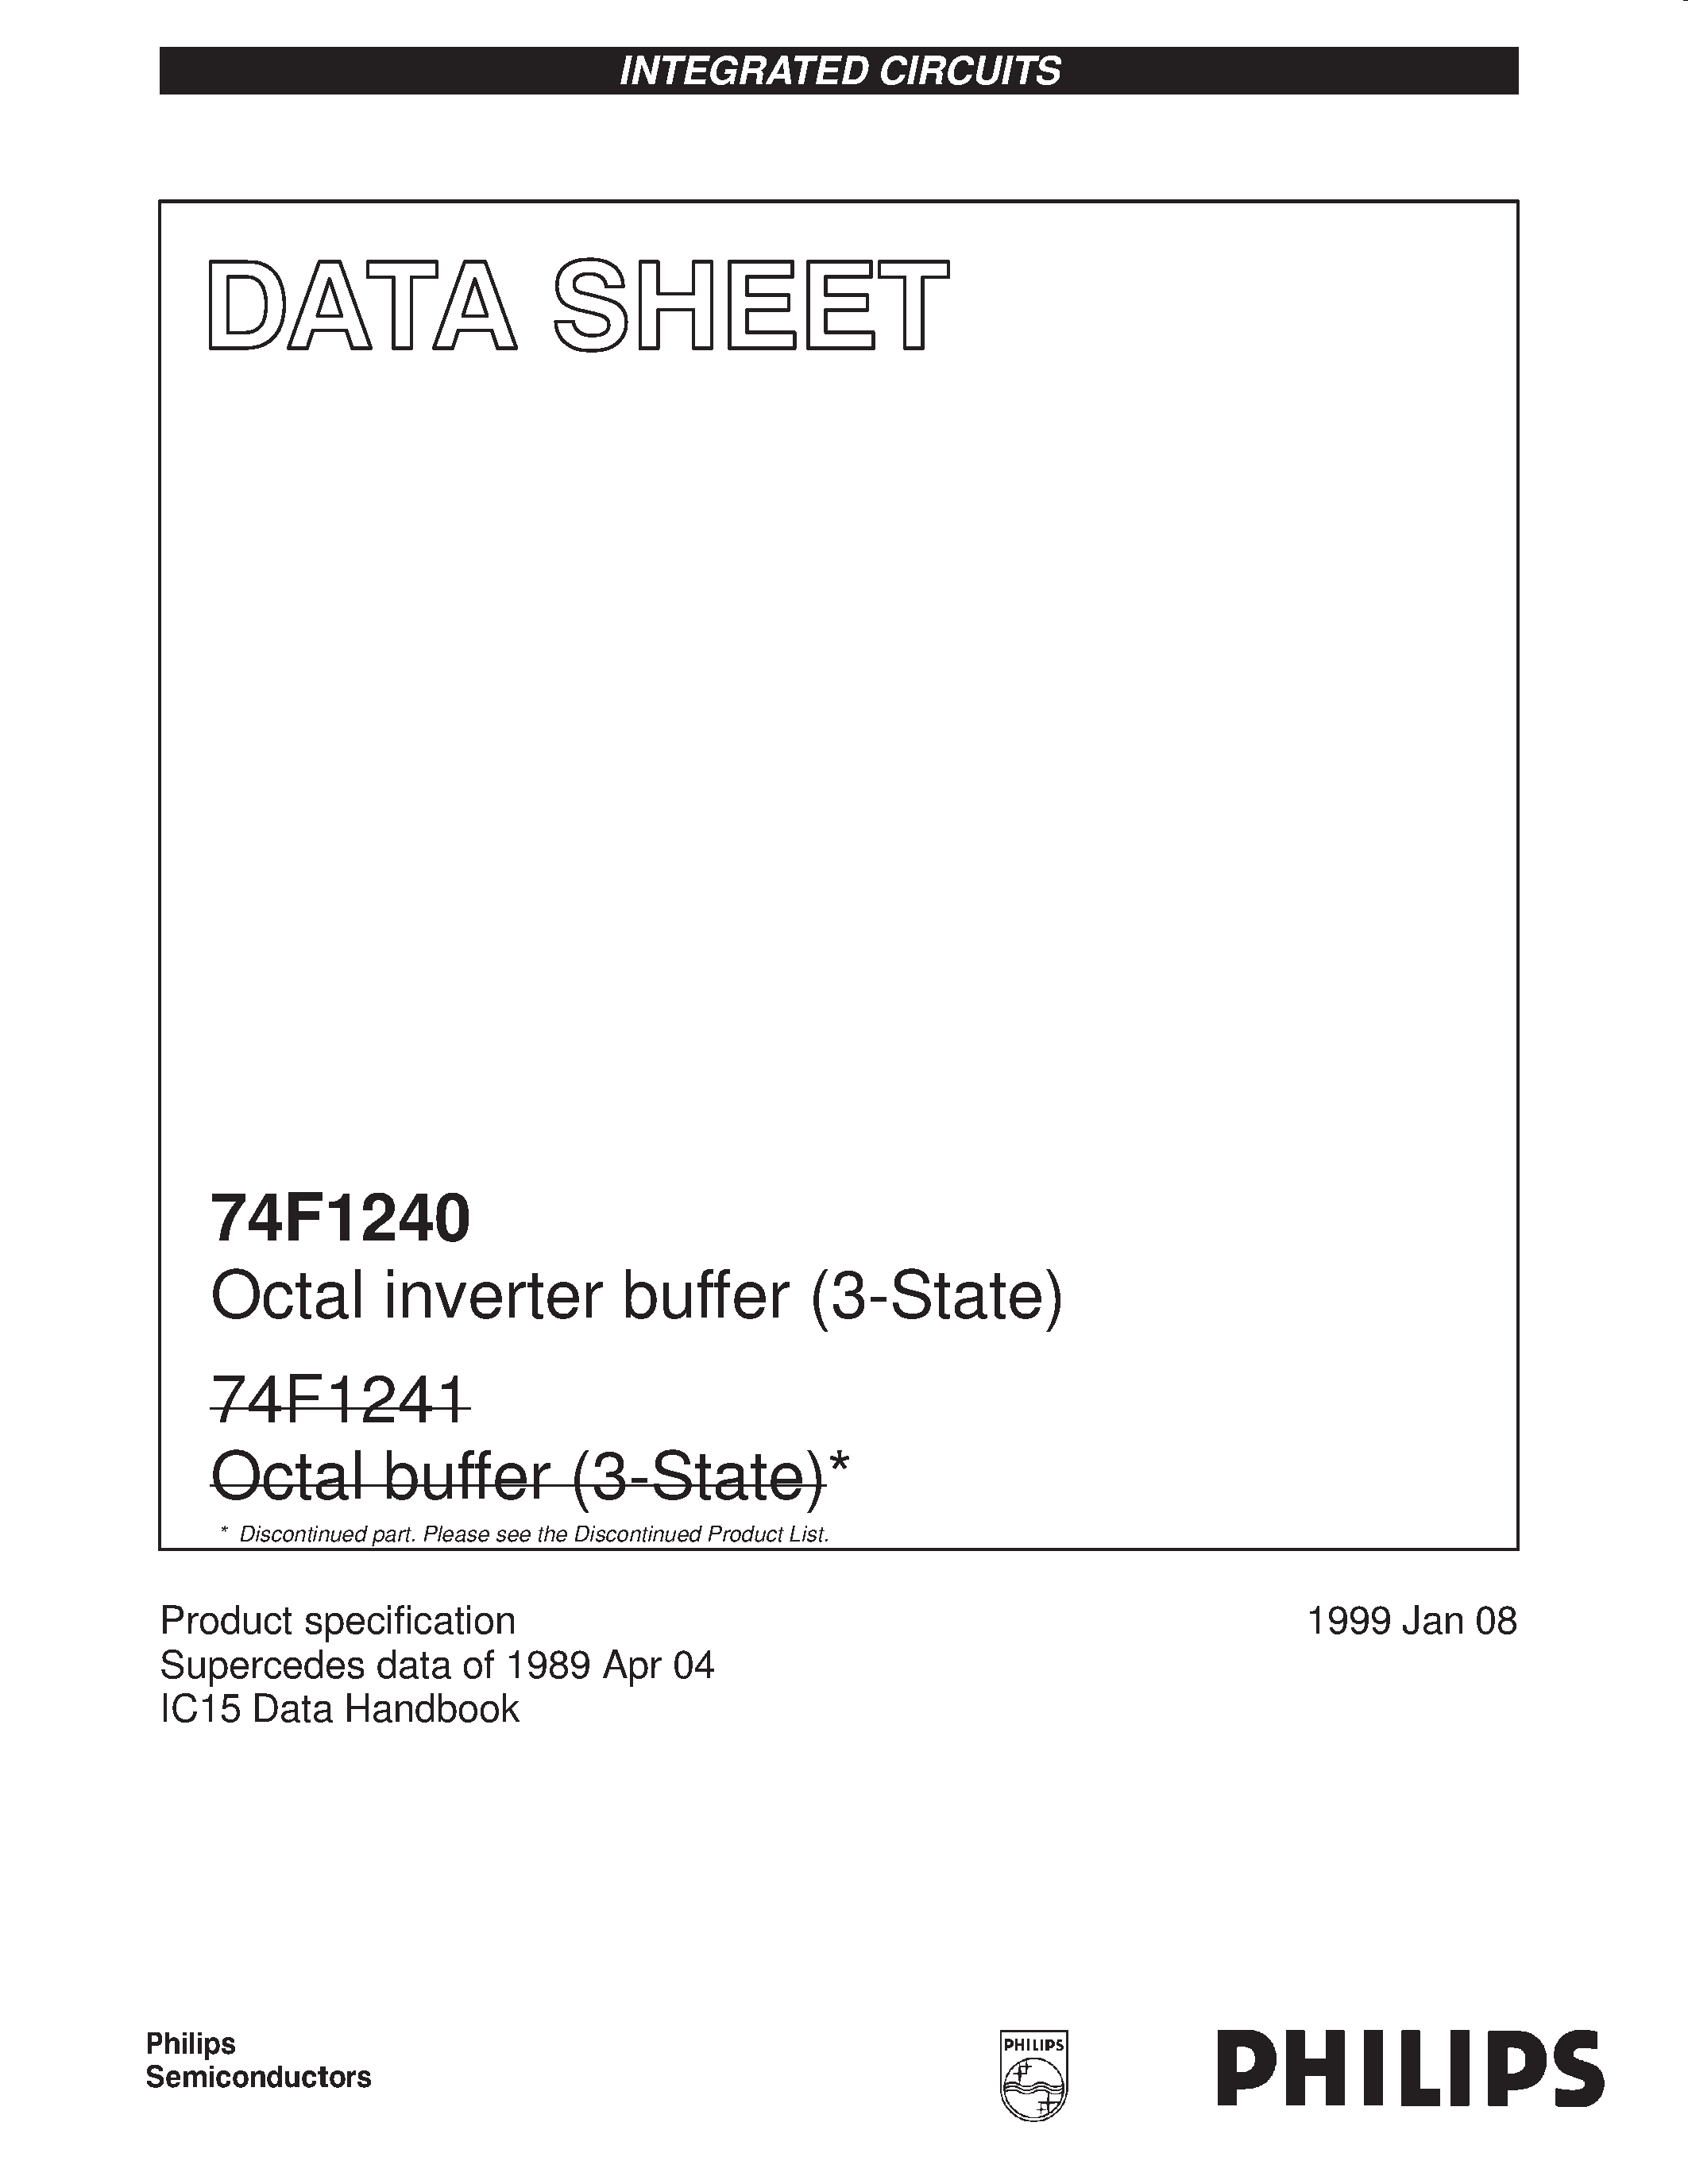 Даташит 74F1240 - Octal inverter buffer 3-State страница 1